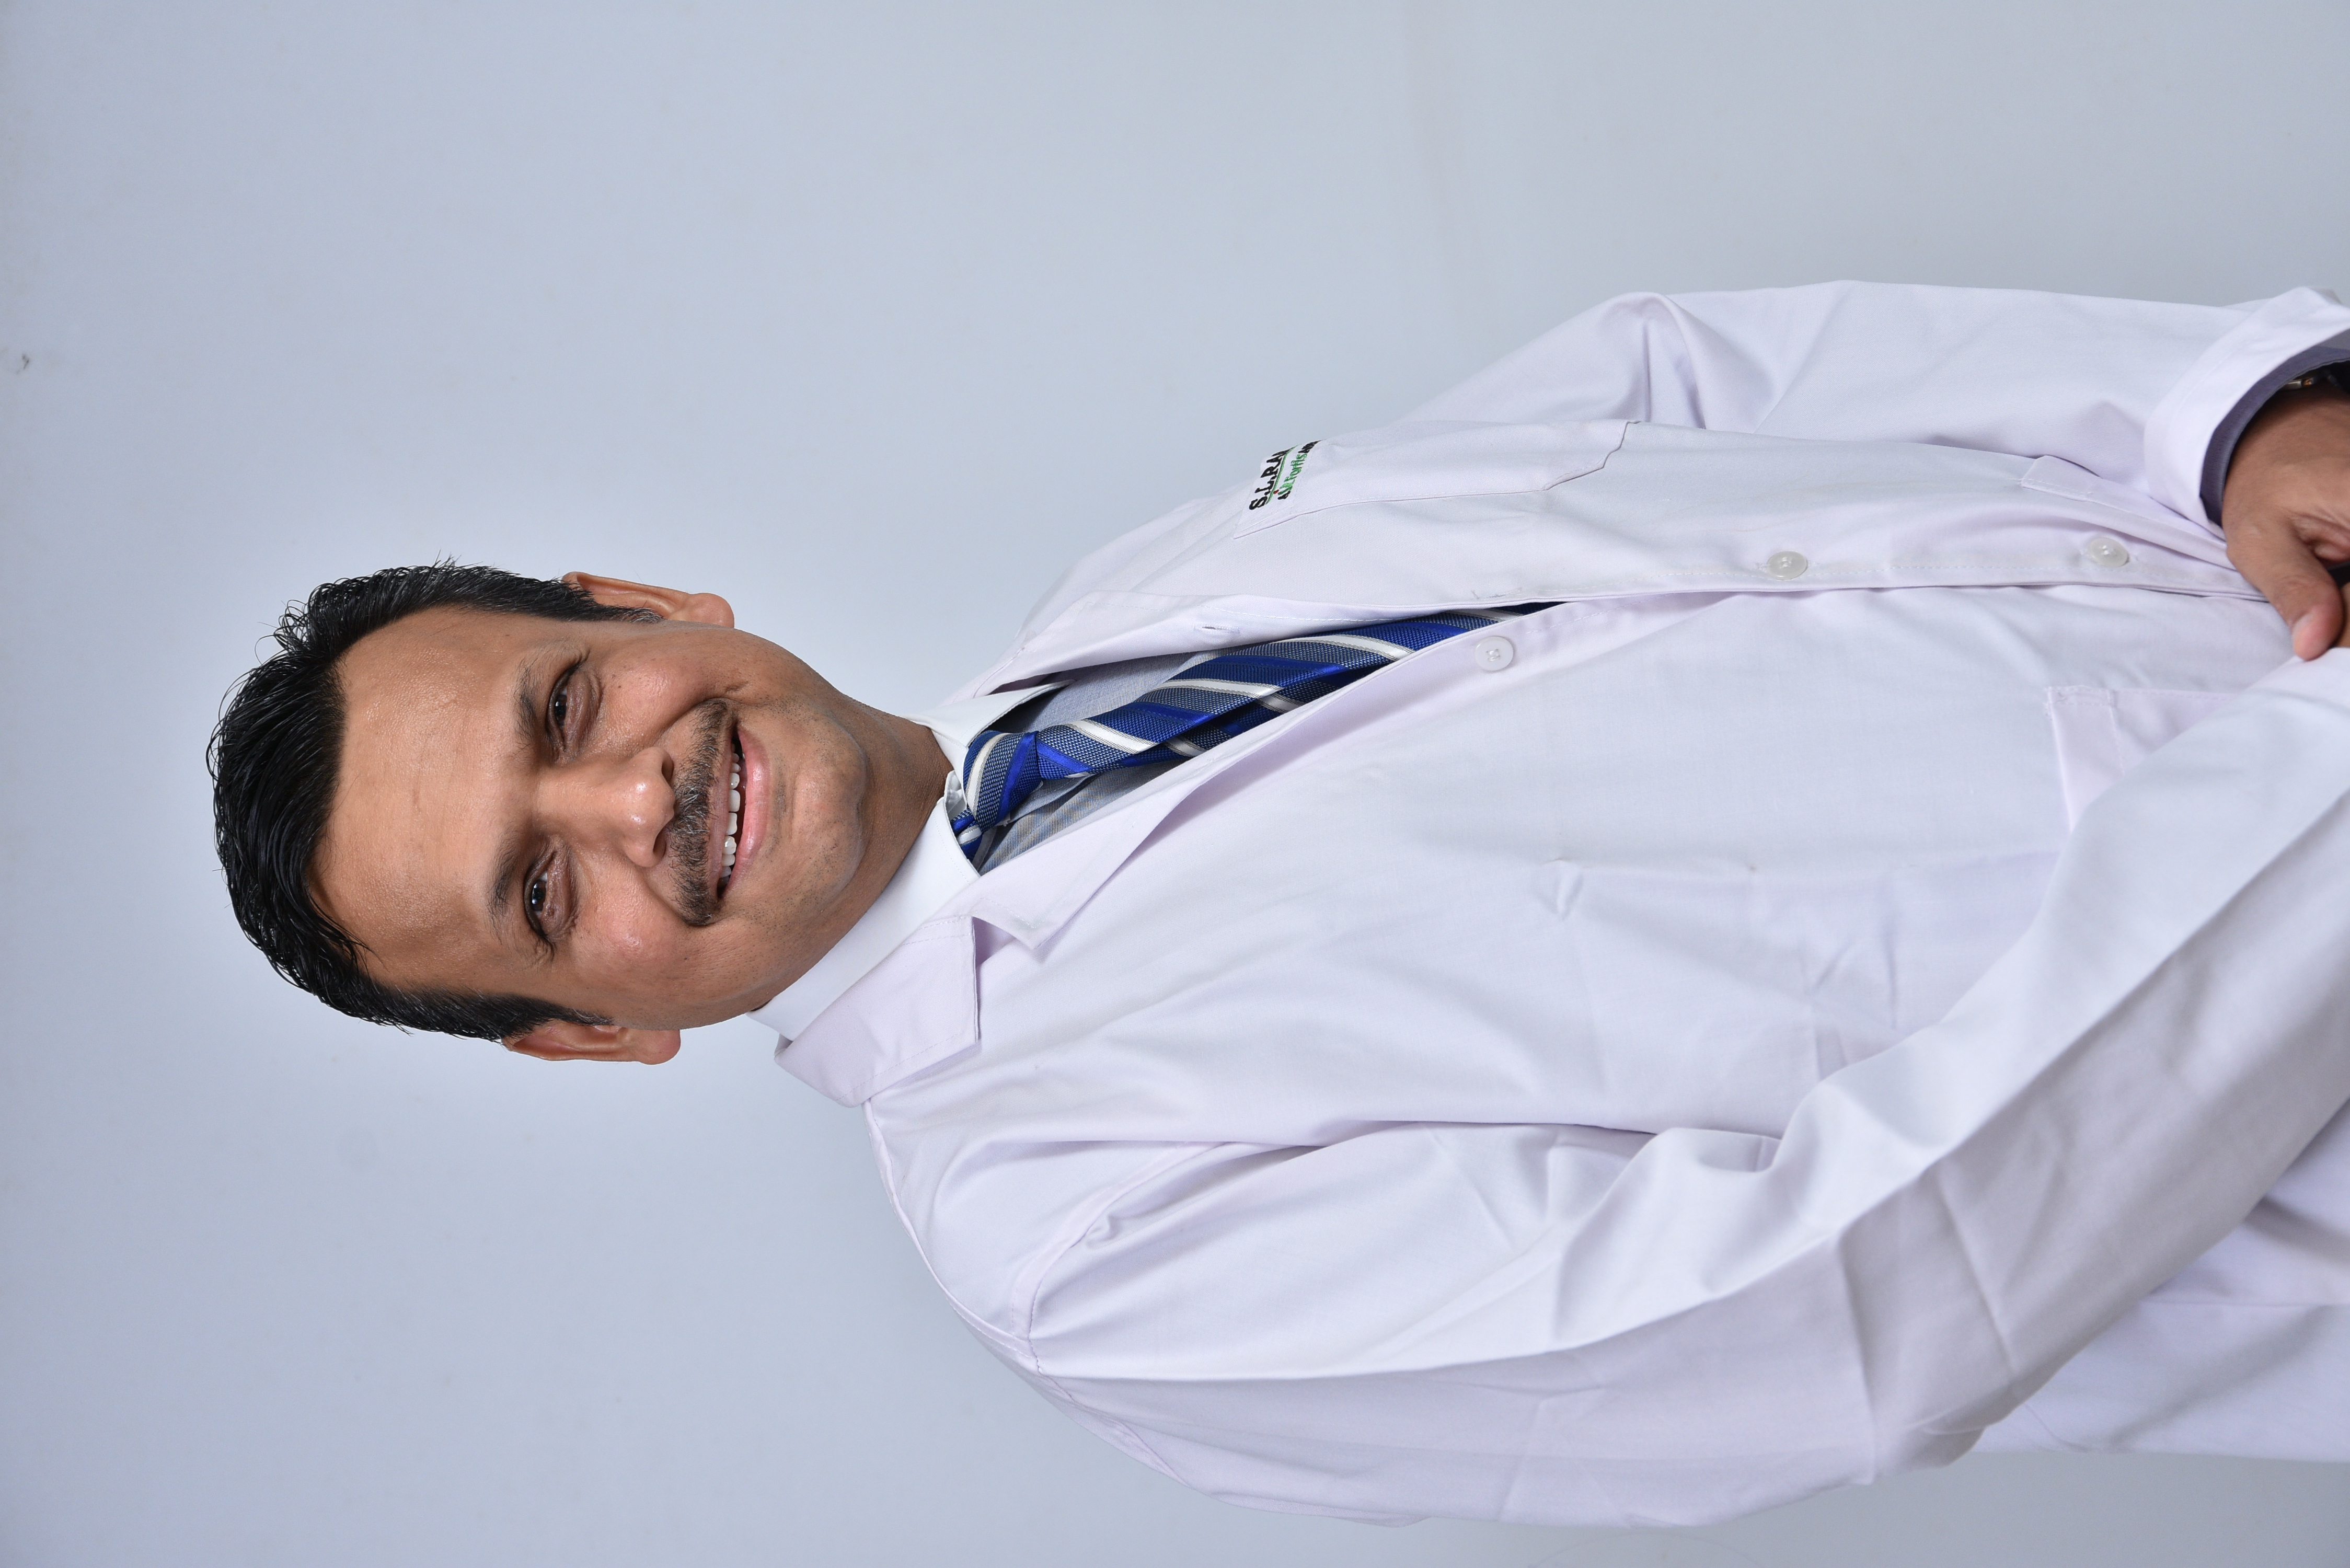 Dr. Lalit Panchal